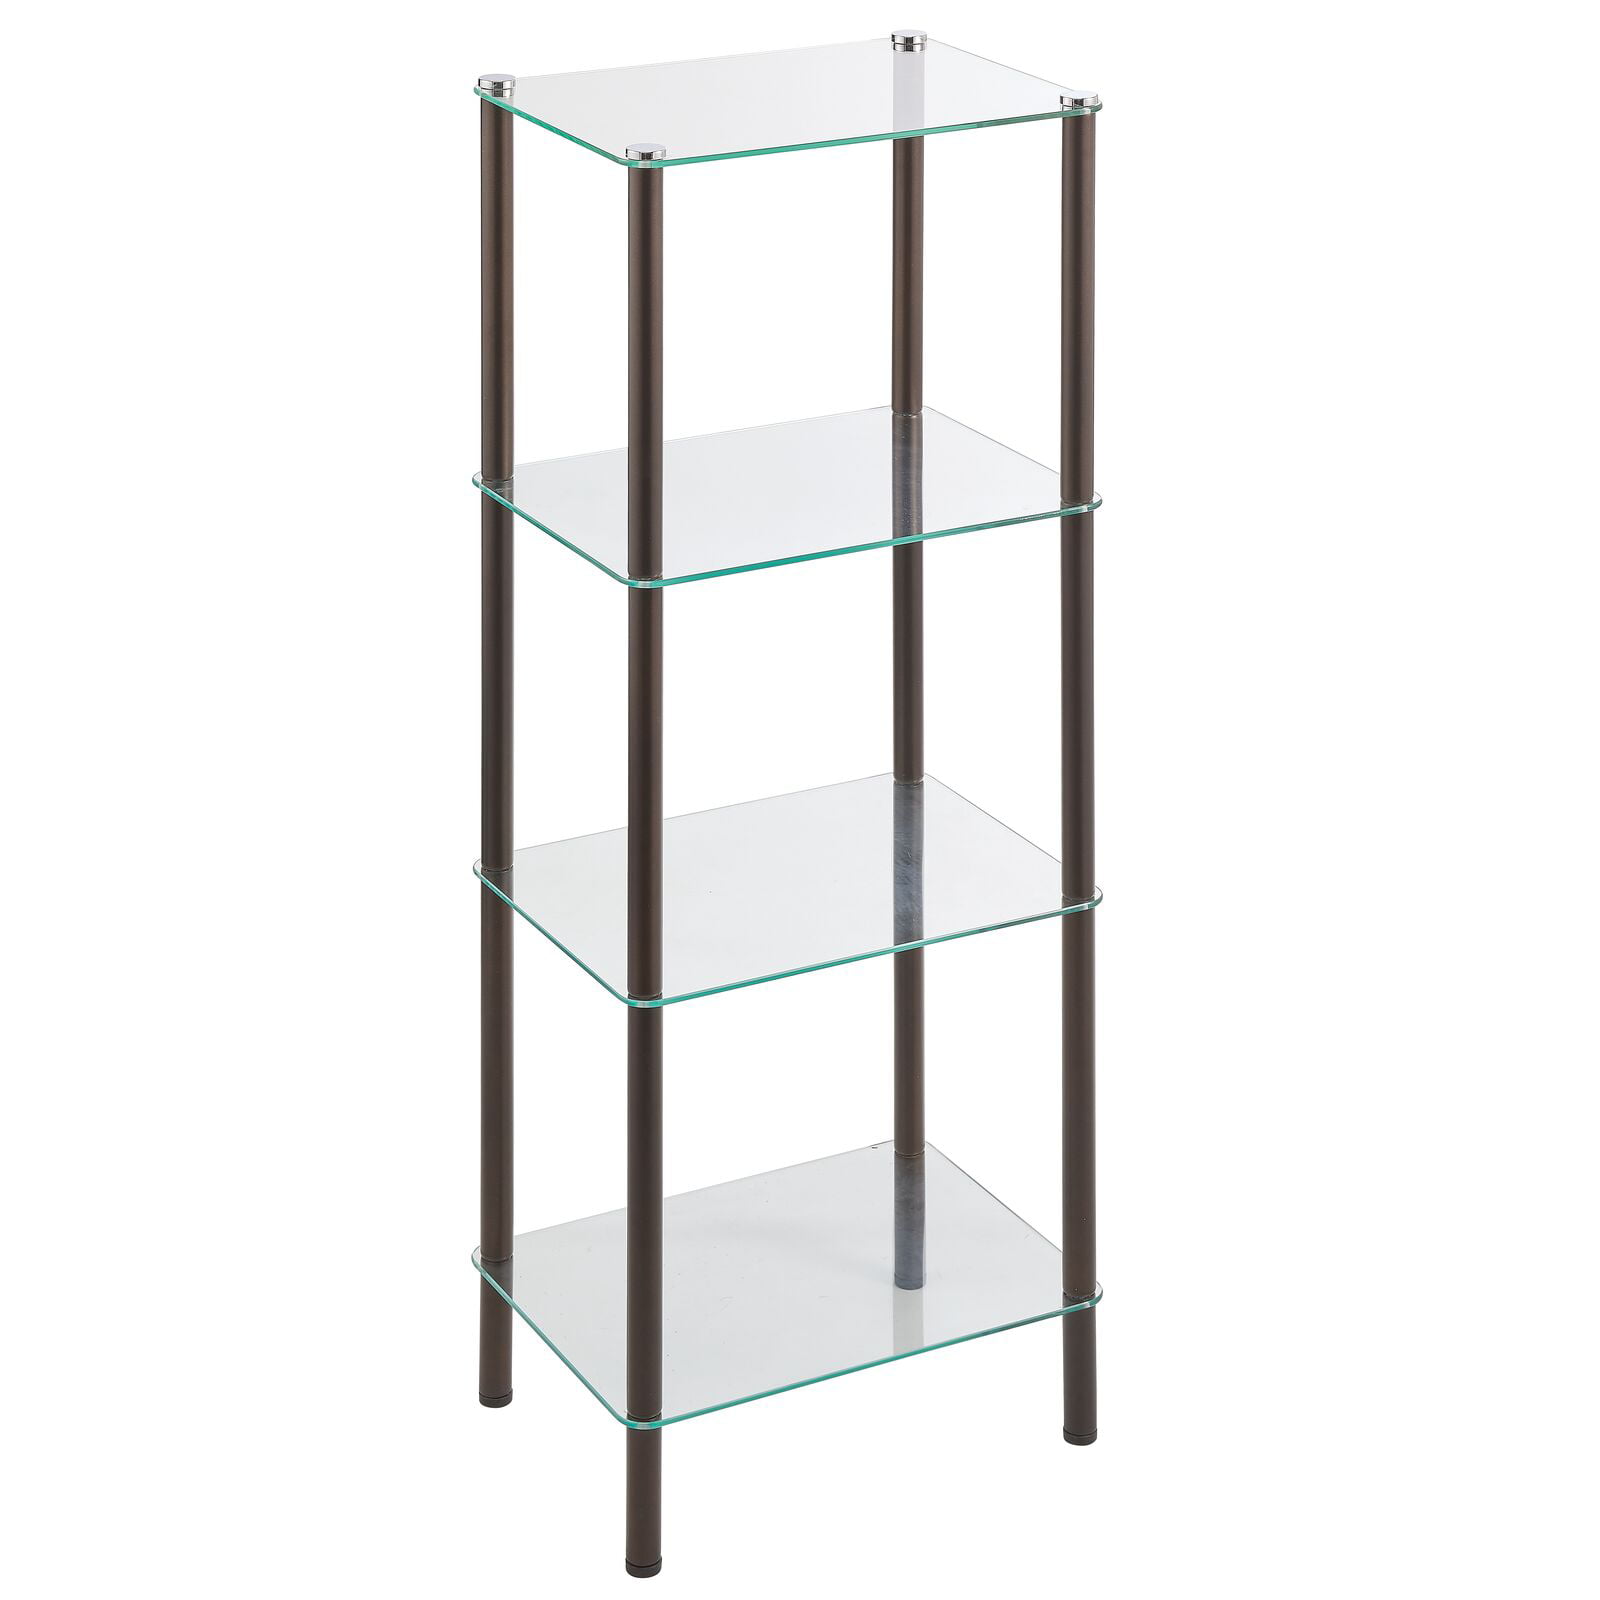 4-Tier Rectangular Glass Shelf Tower Black/Clear Bathroom and Bedroom Compact Storage Shelves for Living Room mDesign Free-Standing Shelves 